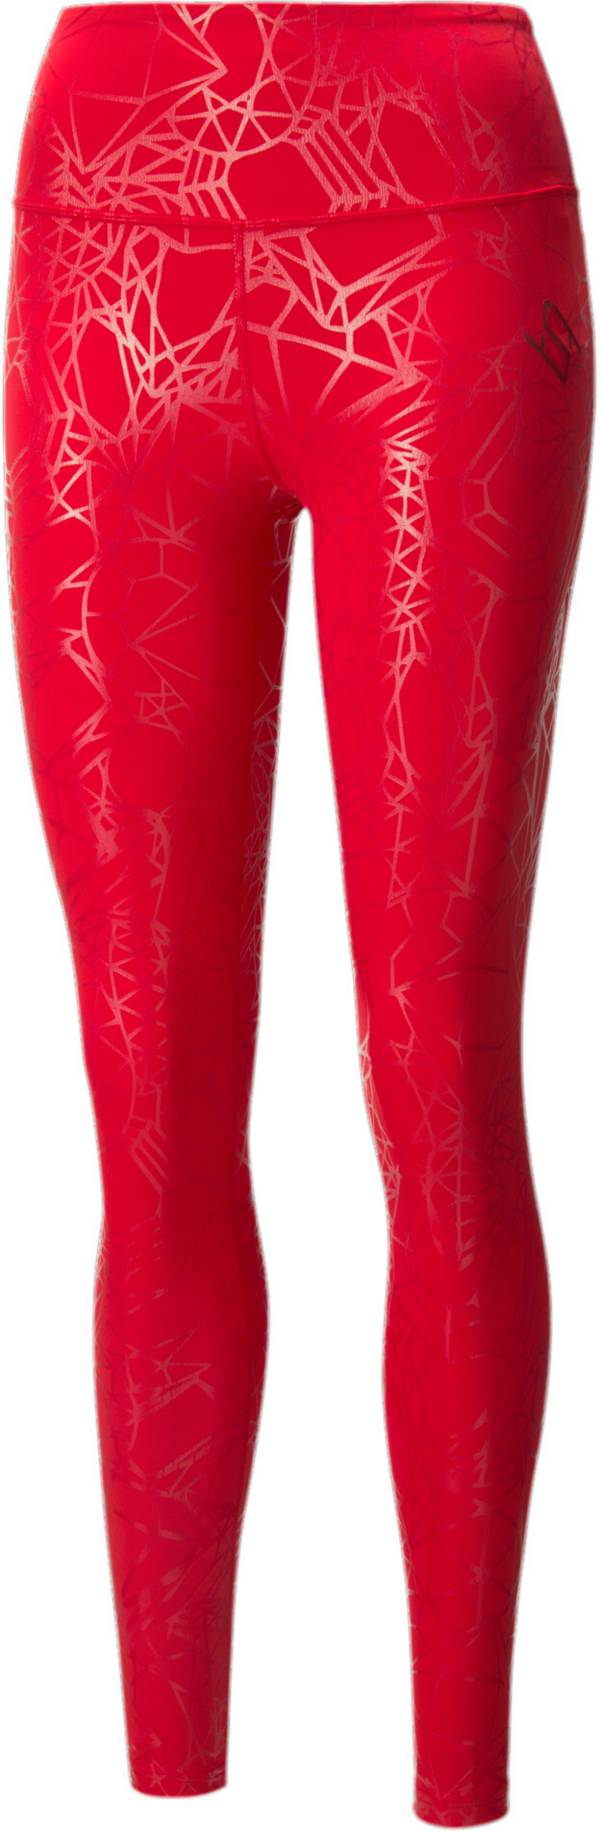 PUMA Women's Stewie X Ruby Leggings product image